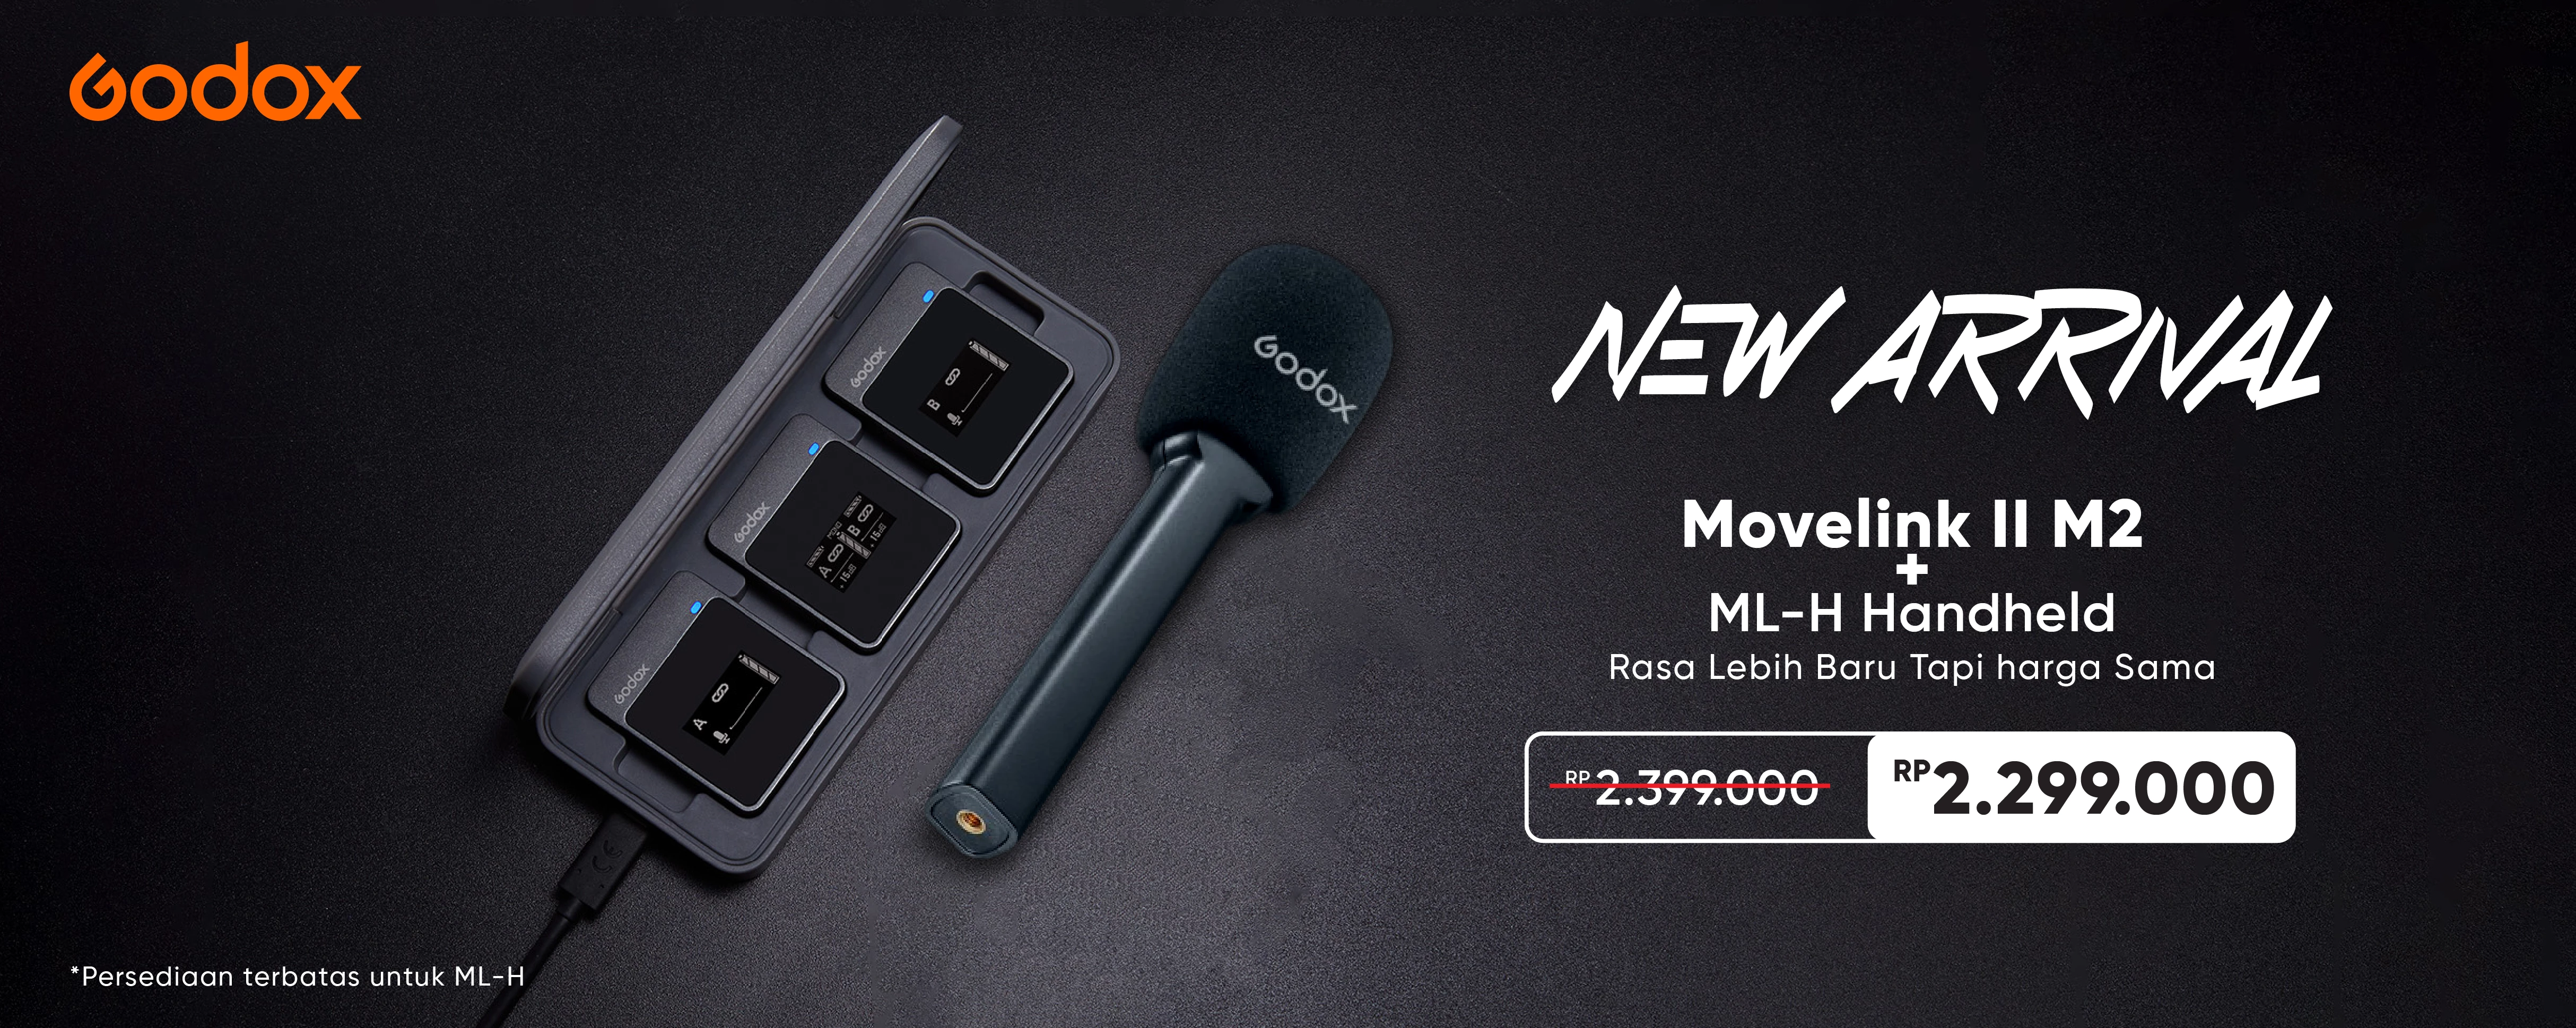 Paket Godox Movelink II M2 + ML-H Handheld  Adapter